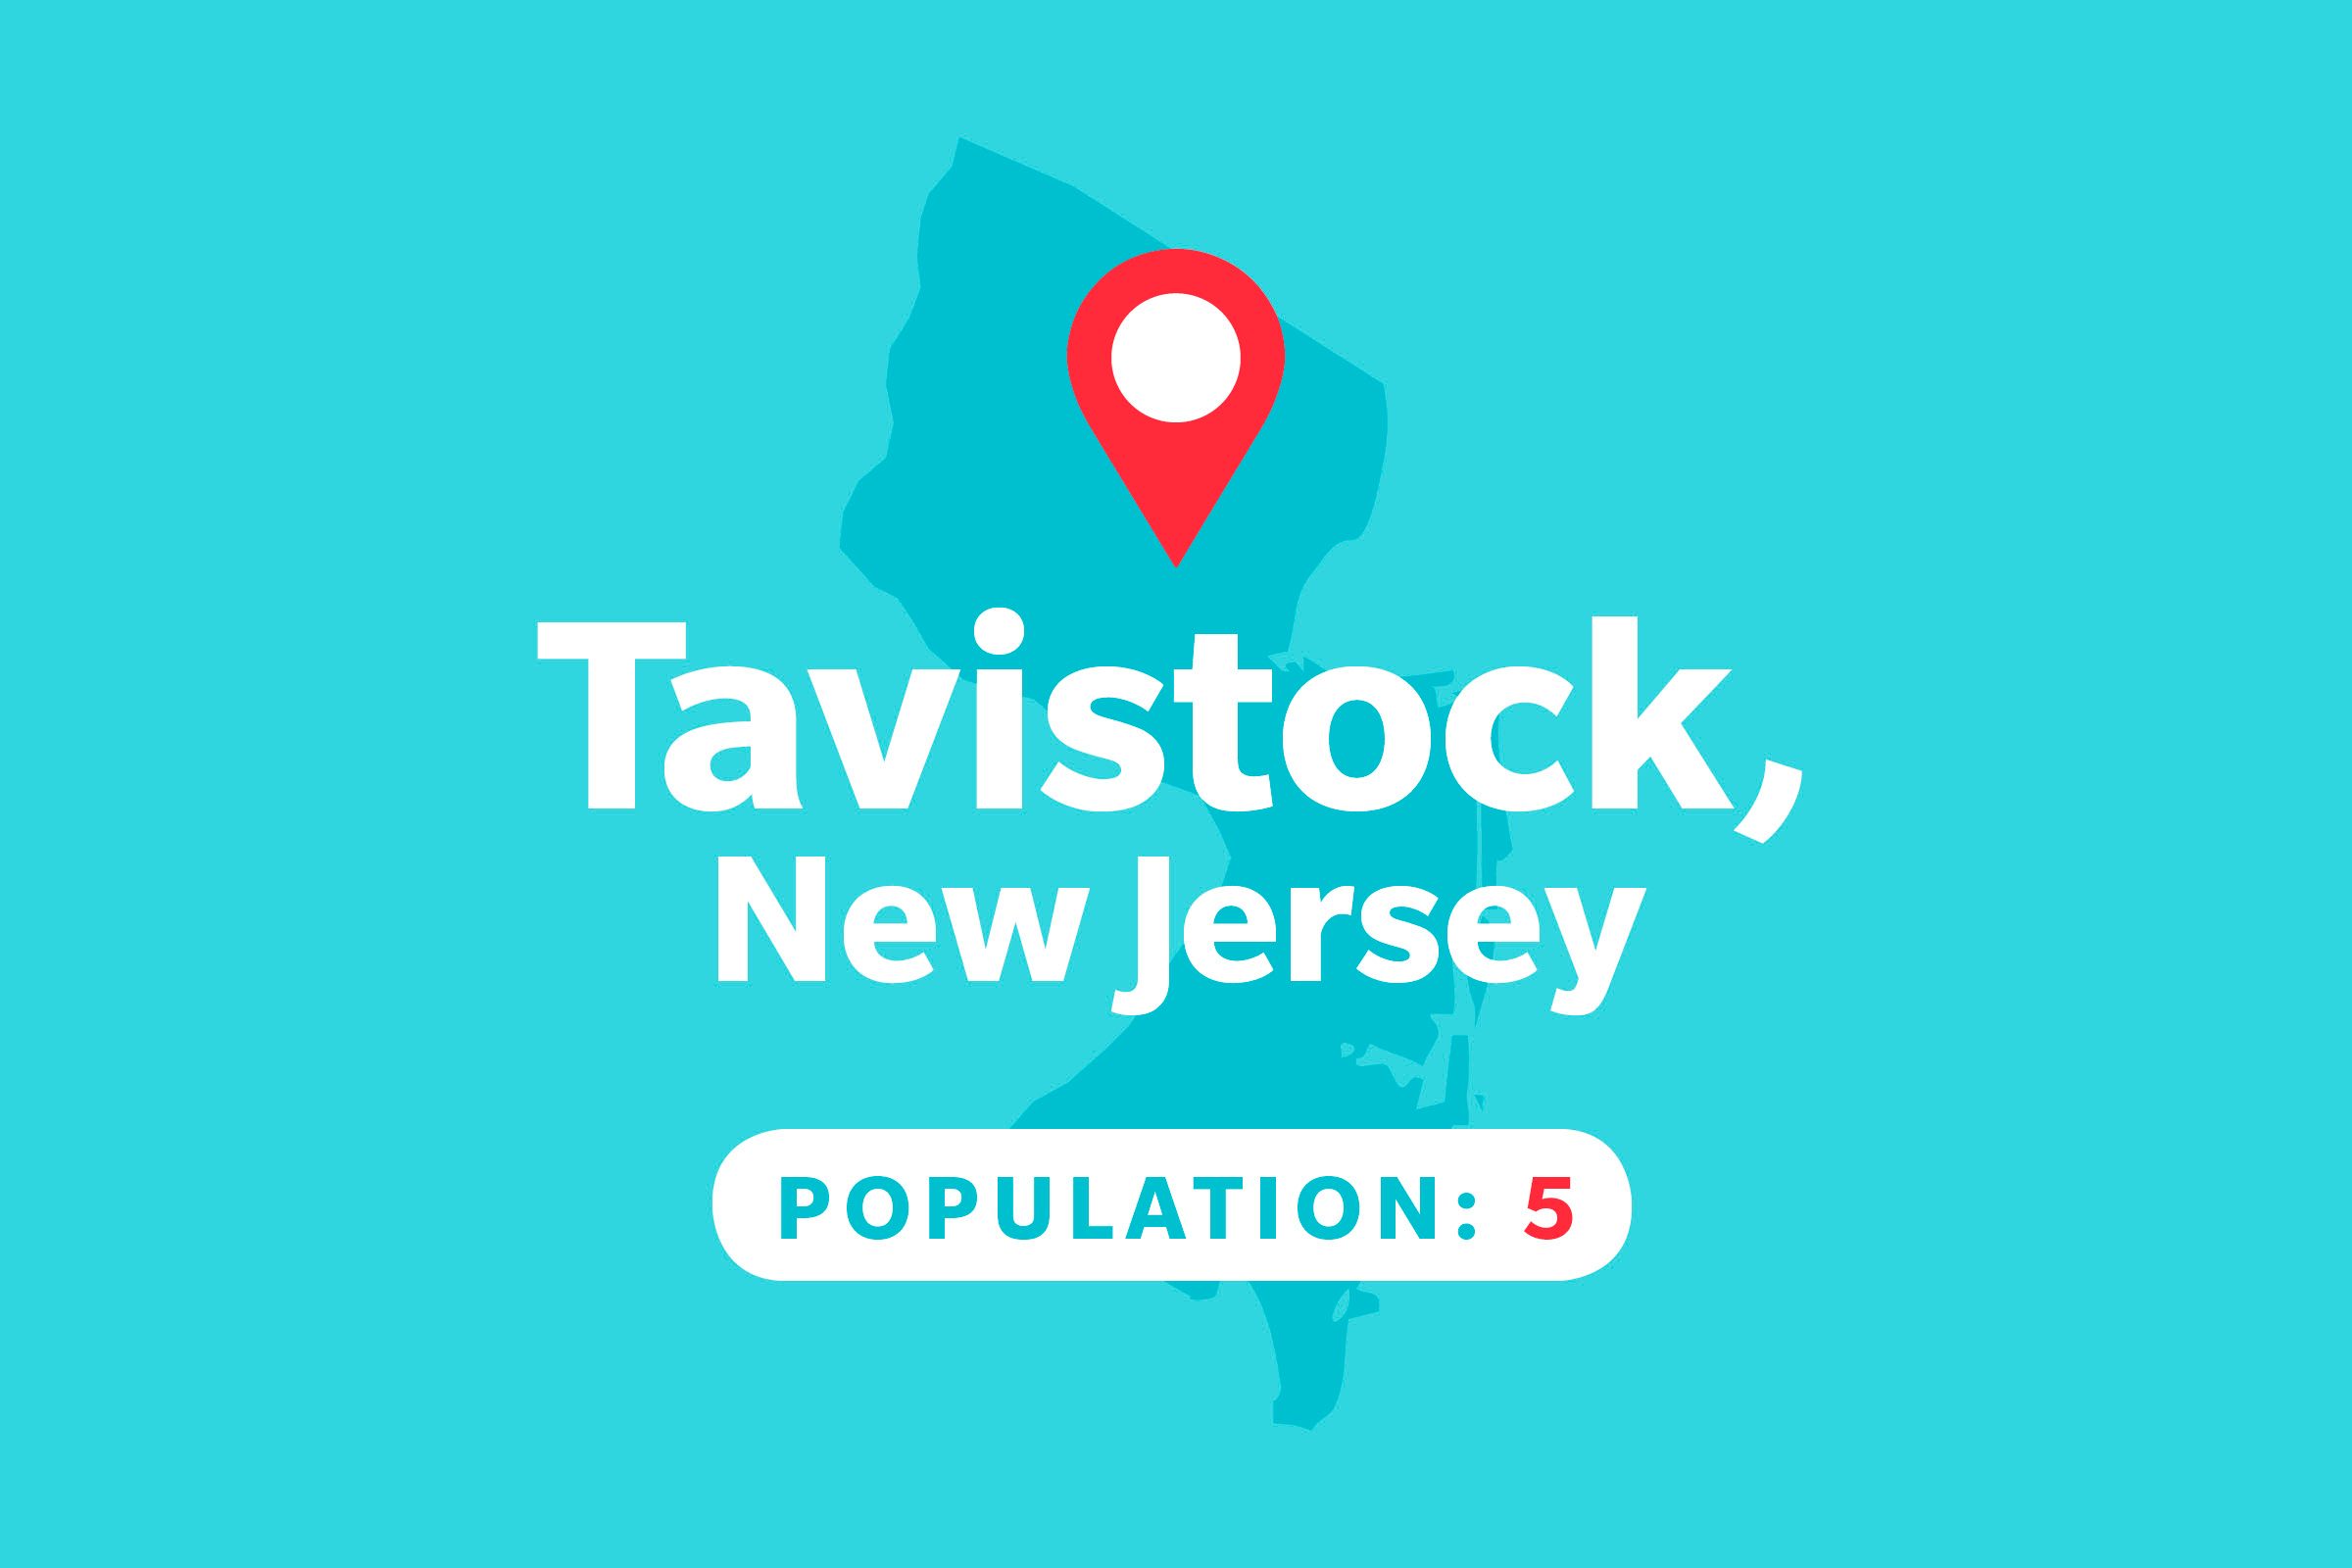 Tavistock, New Jersey